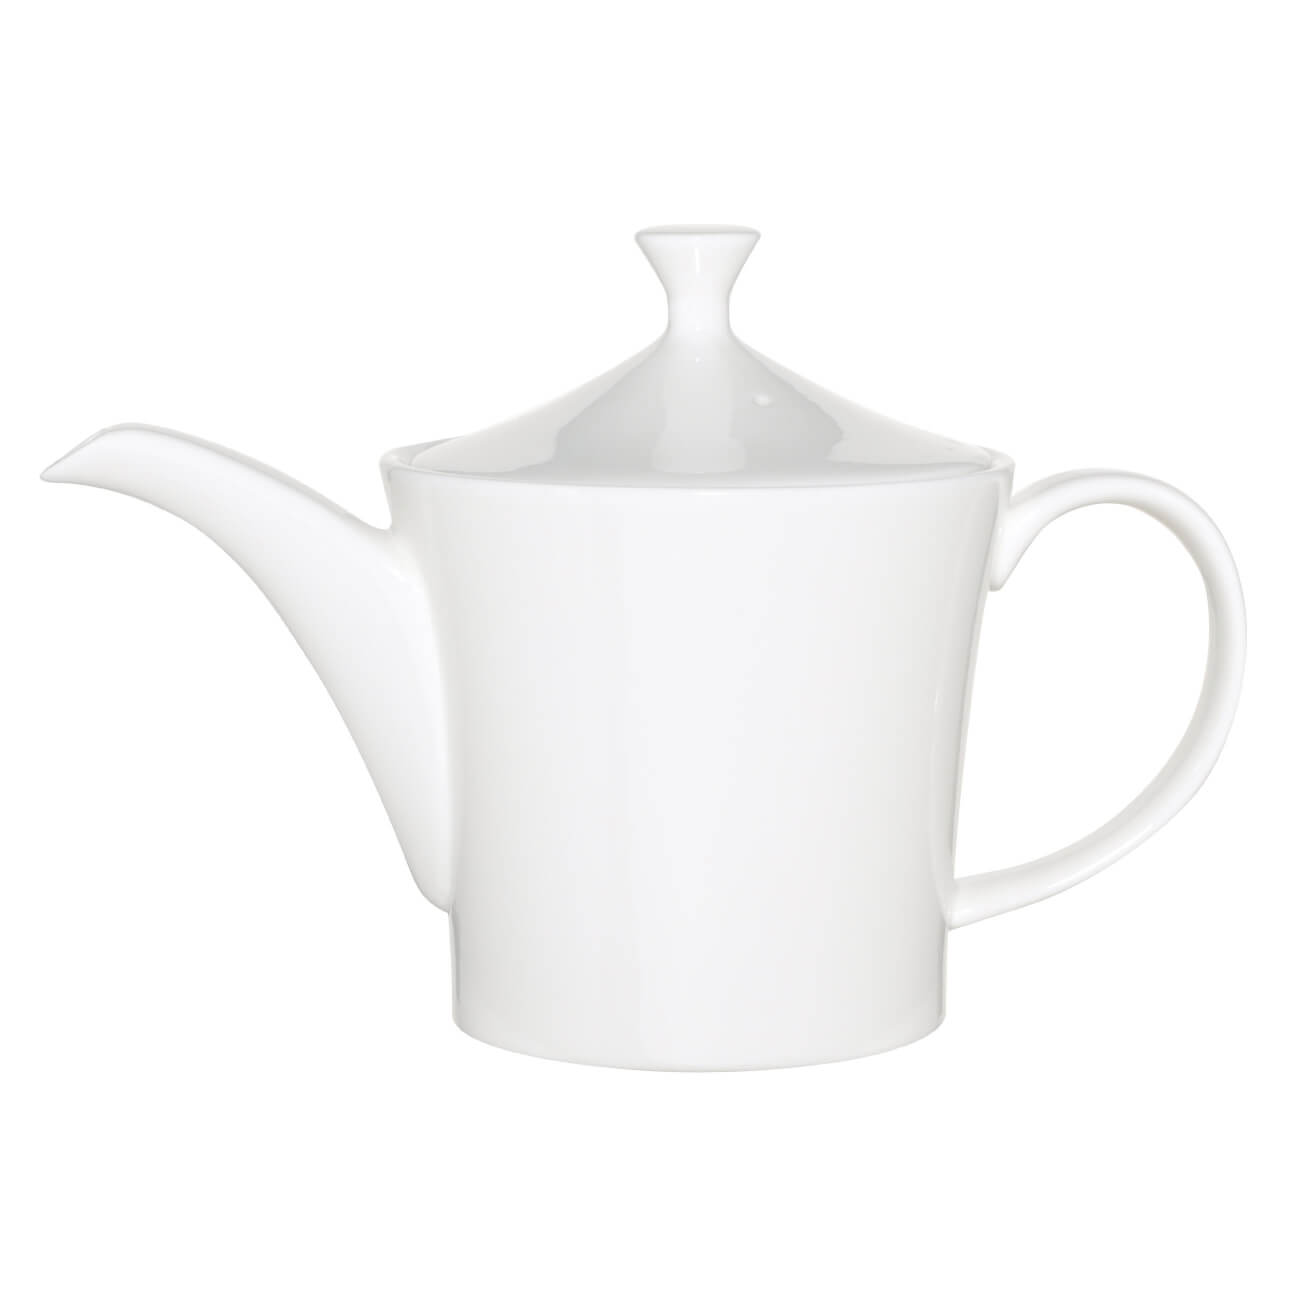 Чайник заварочный, 800 мл, фарфор F, белый, Ideal white чайник заварочный wilmax 850 мл